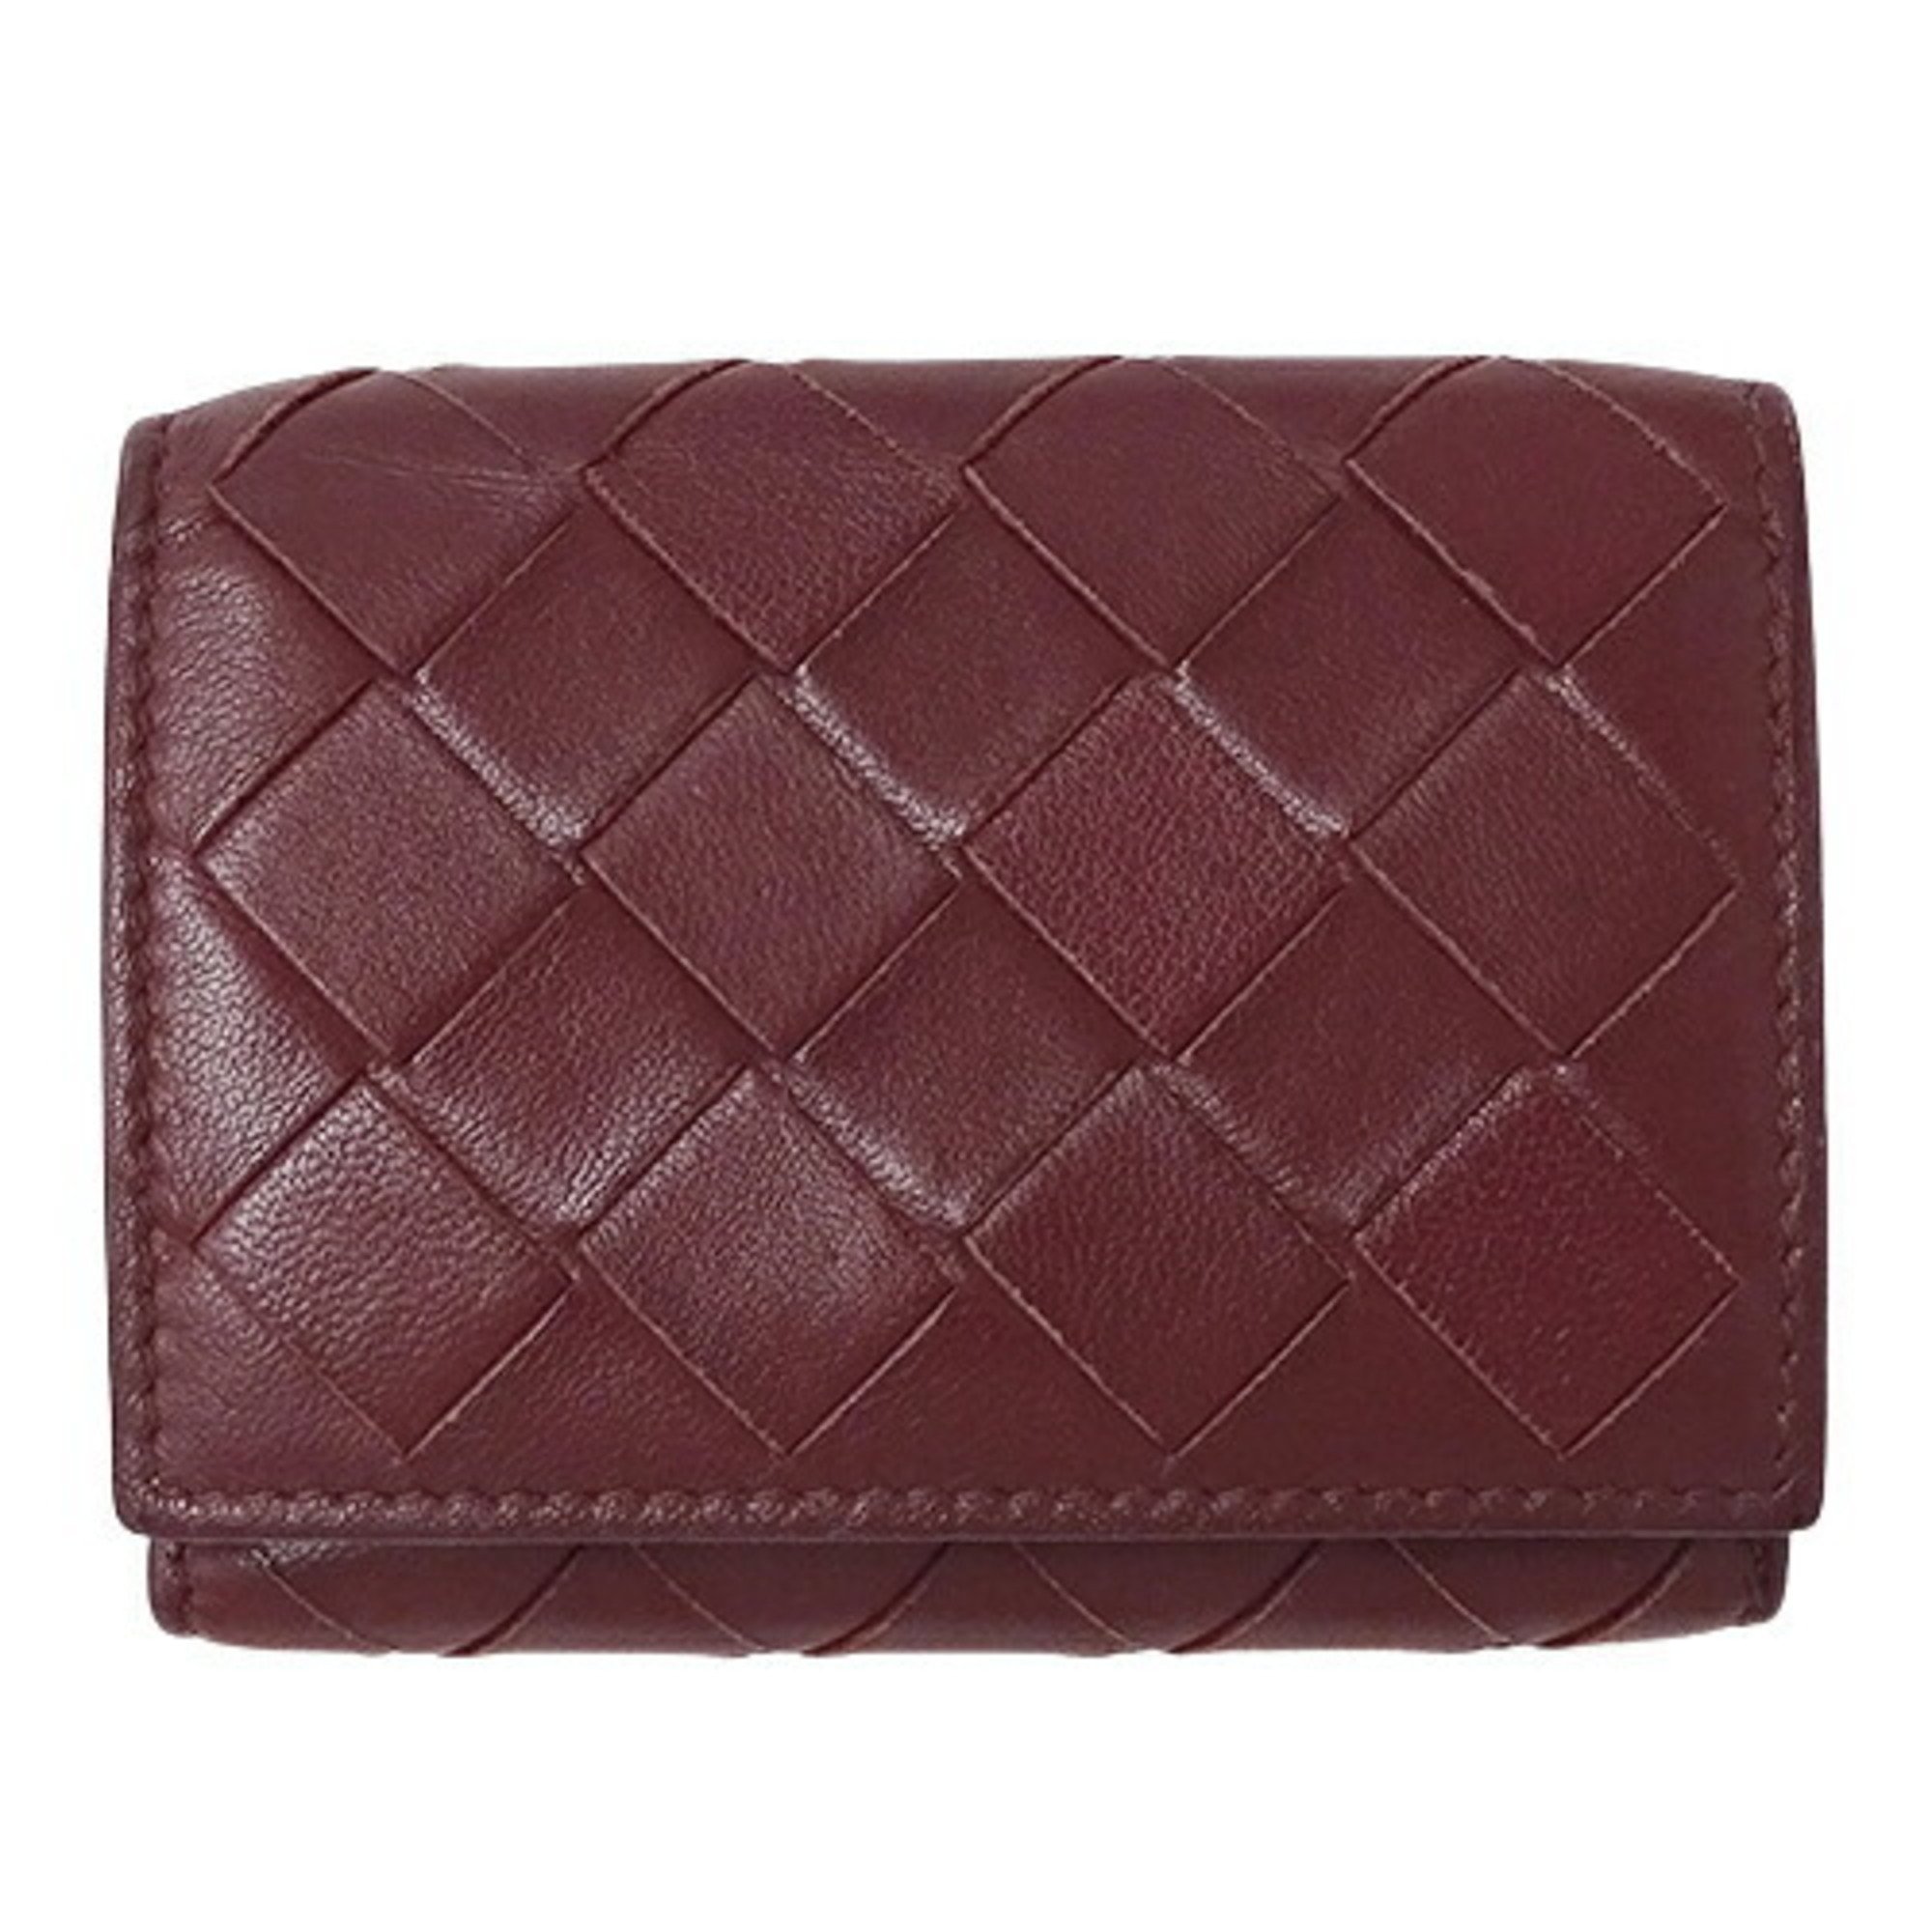 BOTTEGA VENETA Wallet Women's Men's Trifold Intrecciato Leather Bordeaux Red 635561